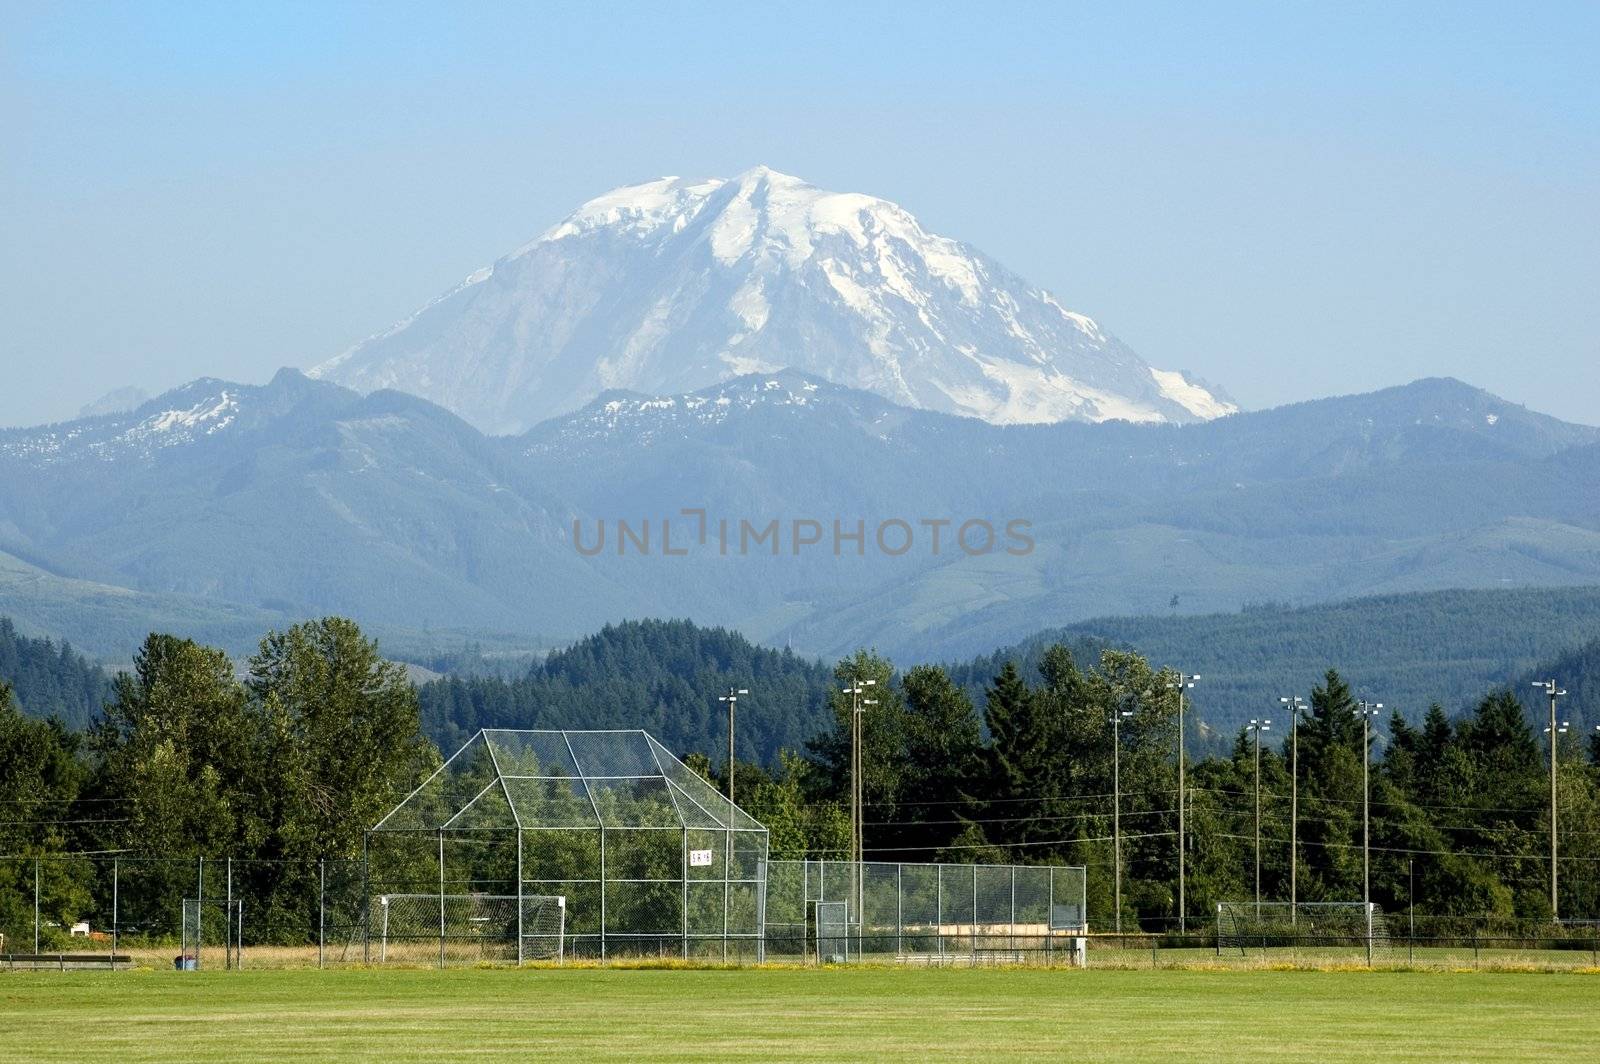 Mount Rainier Towers over Soccer Field by suwanneeredhead